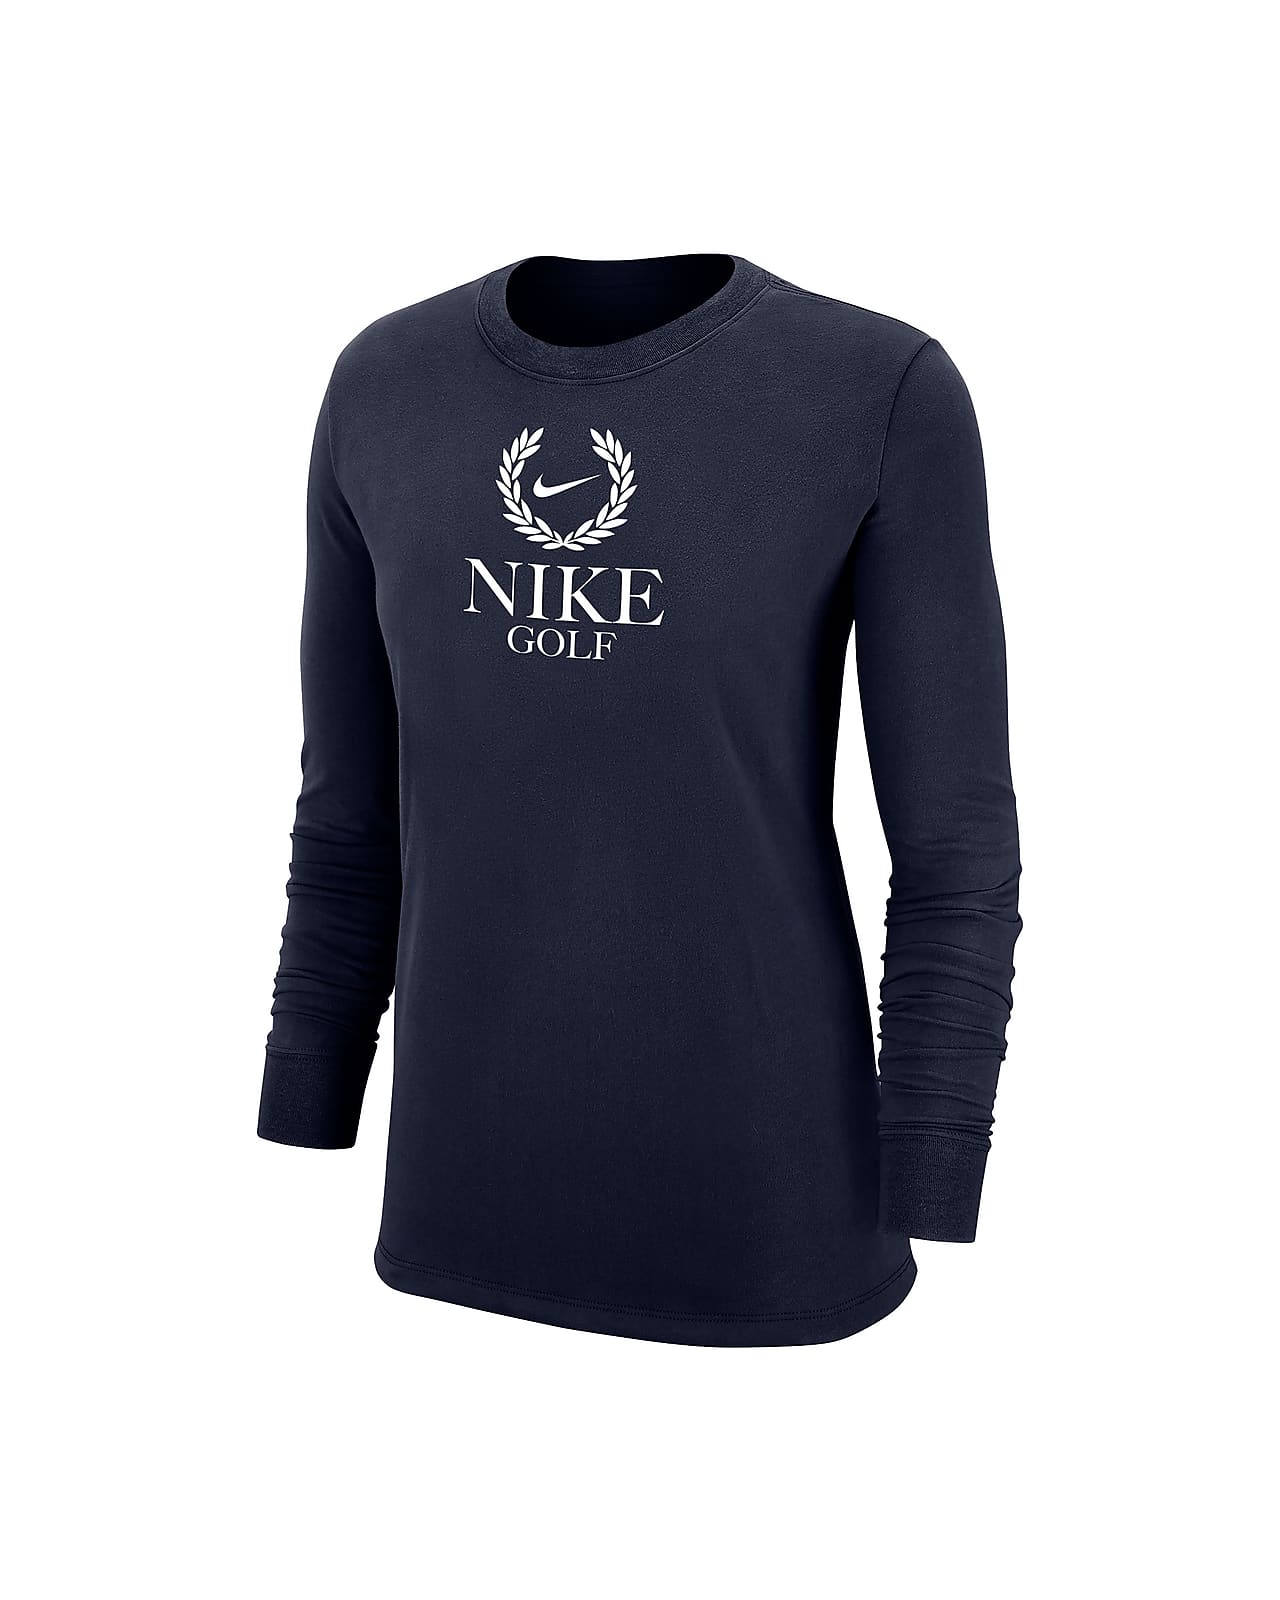 Nike Golf Women's Long-Sleeve T-Shirt